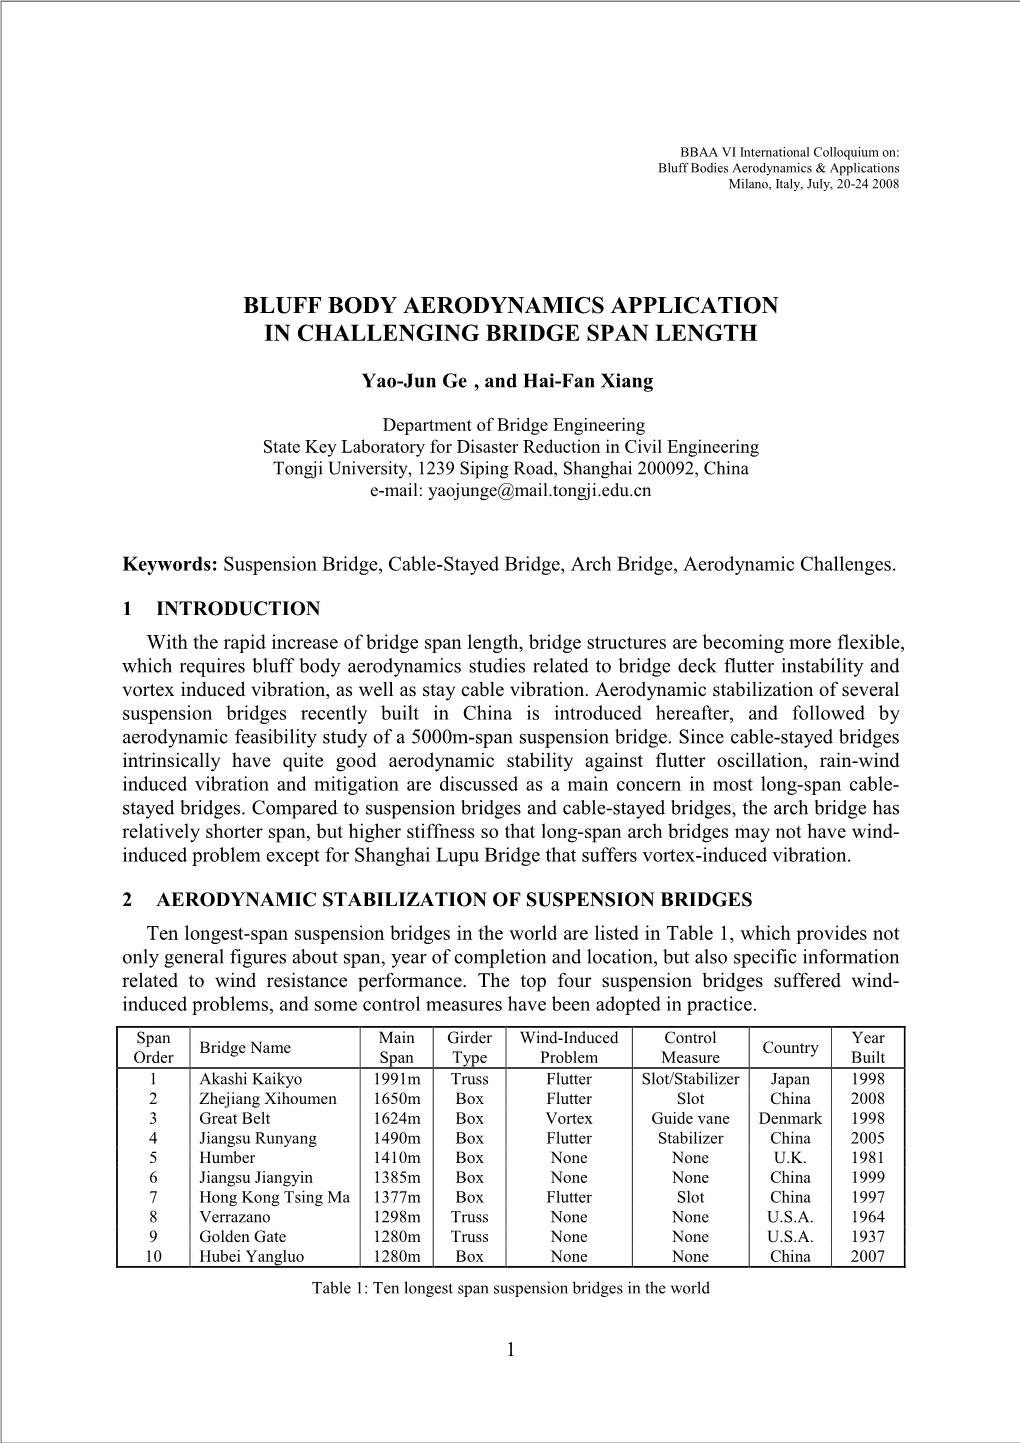 Bluff Body Aerodynamics Application in Challenging Bridge Span Length